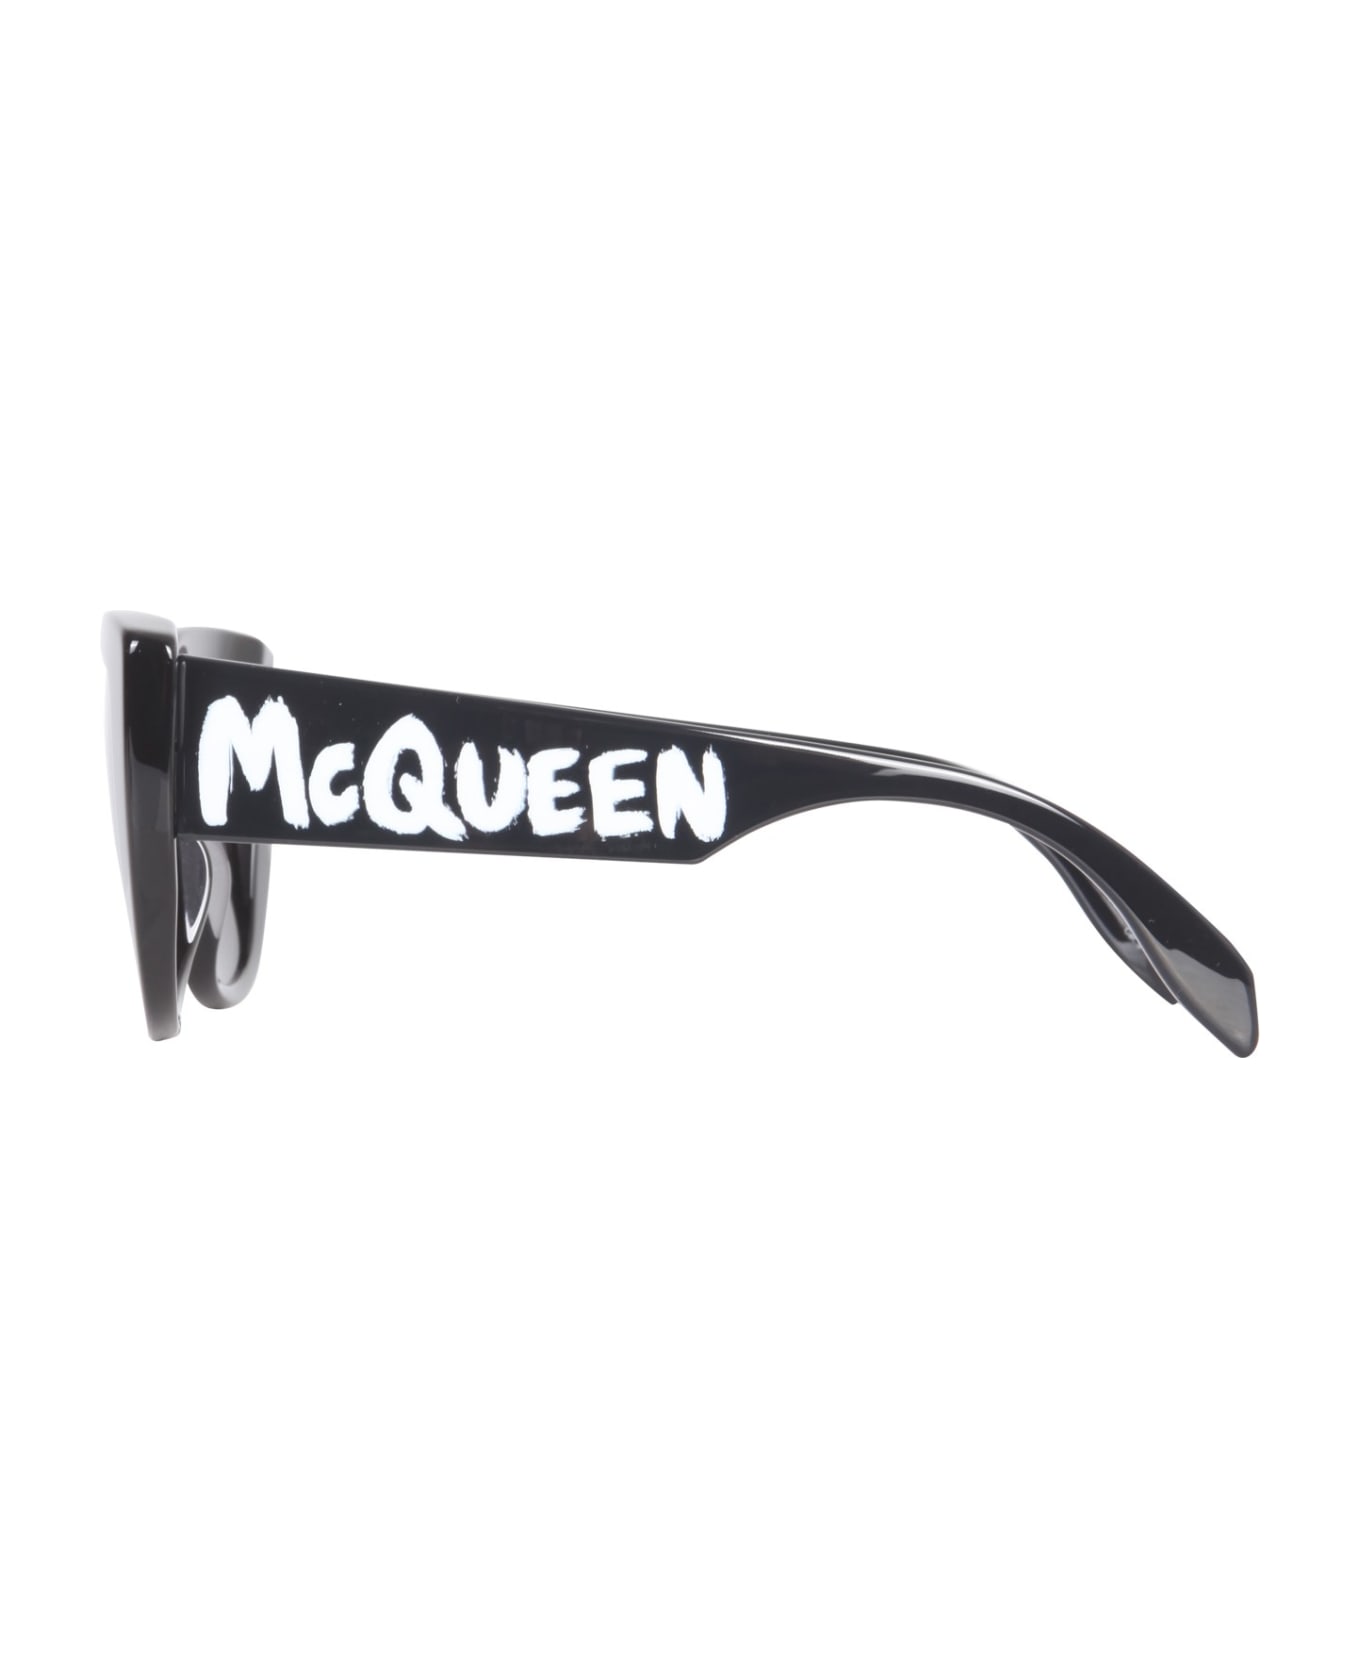 Alexander McQueen Sunglasses Cat-eyes - Nero